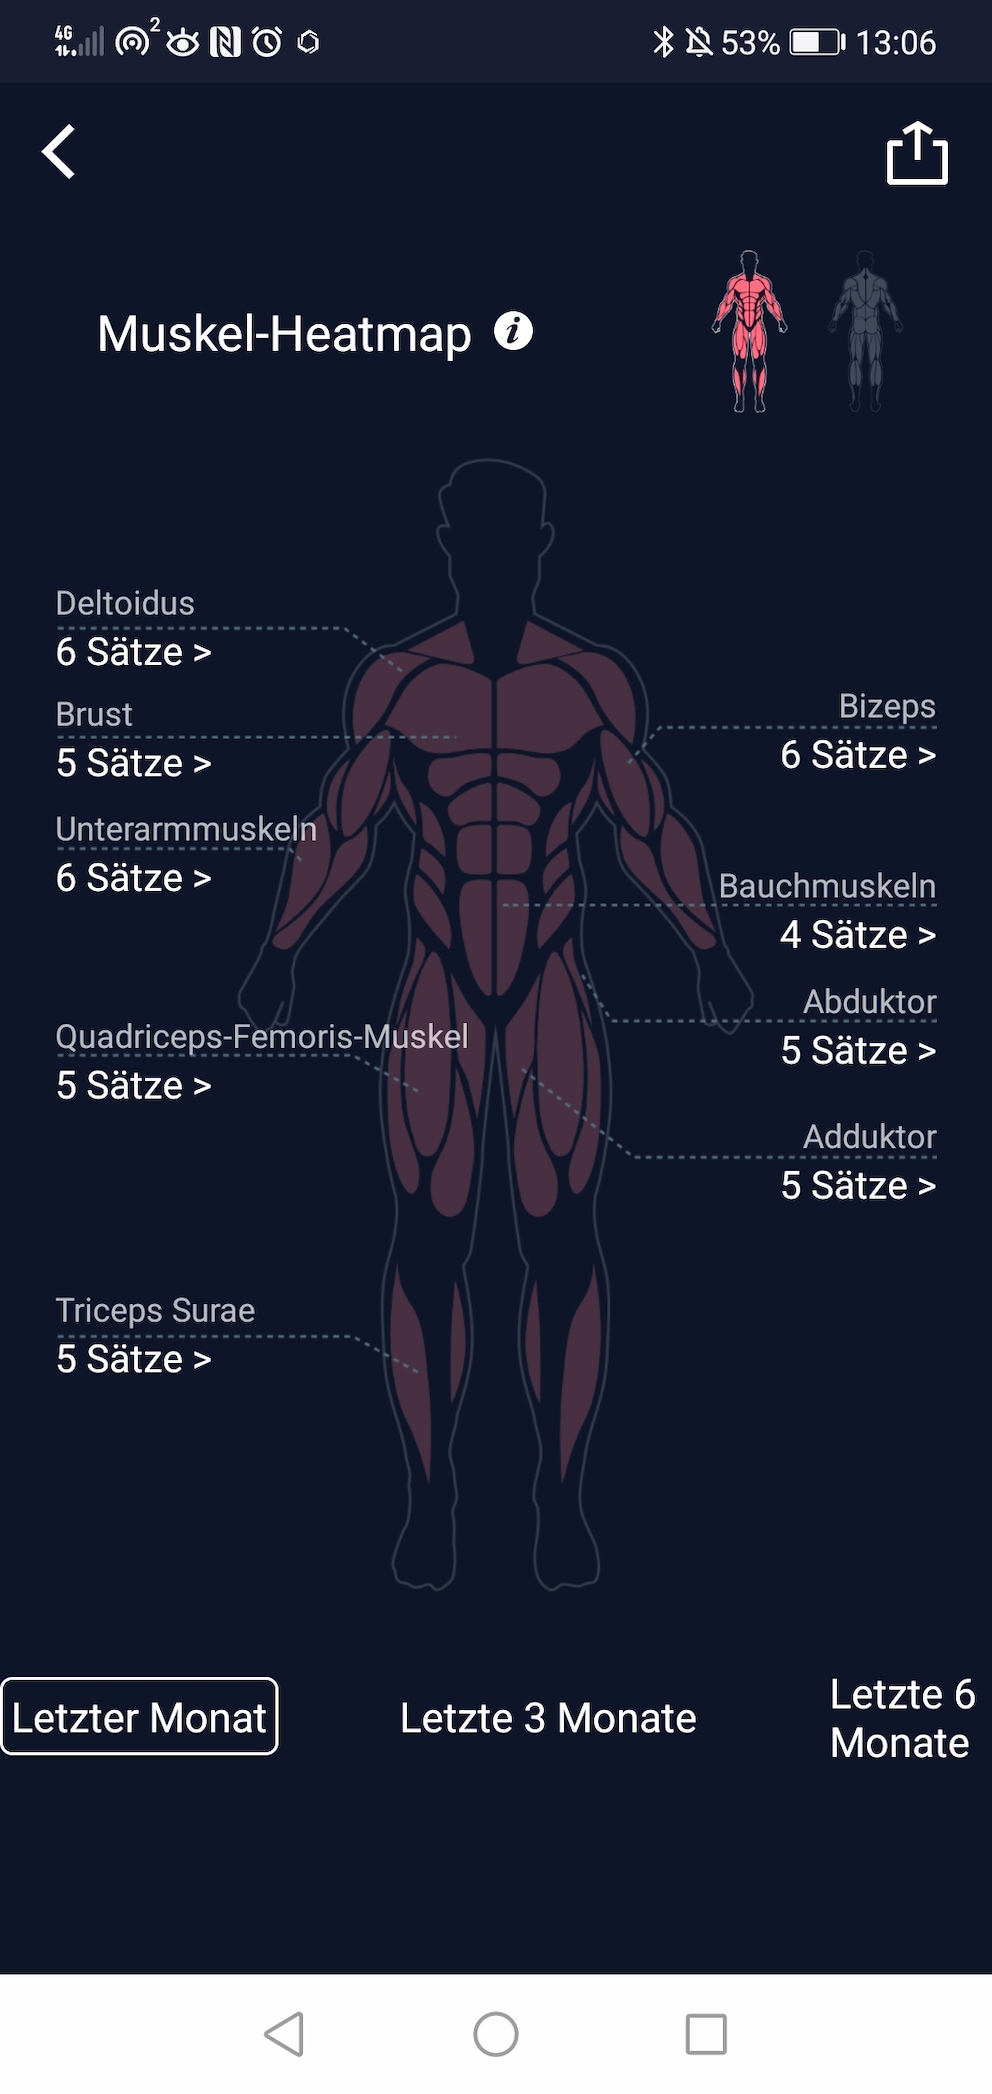 Die Muscle-Heatmap.